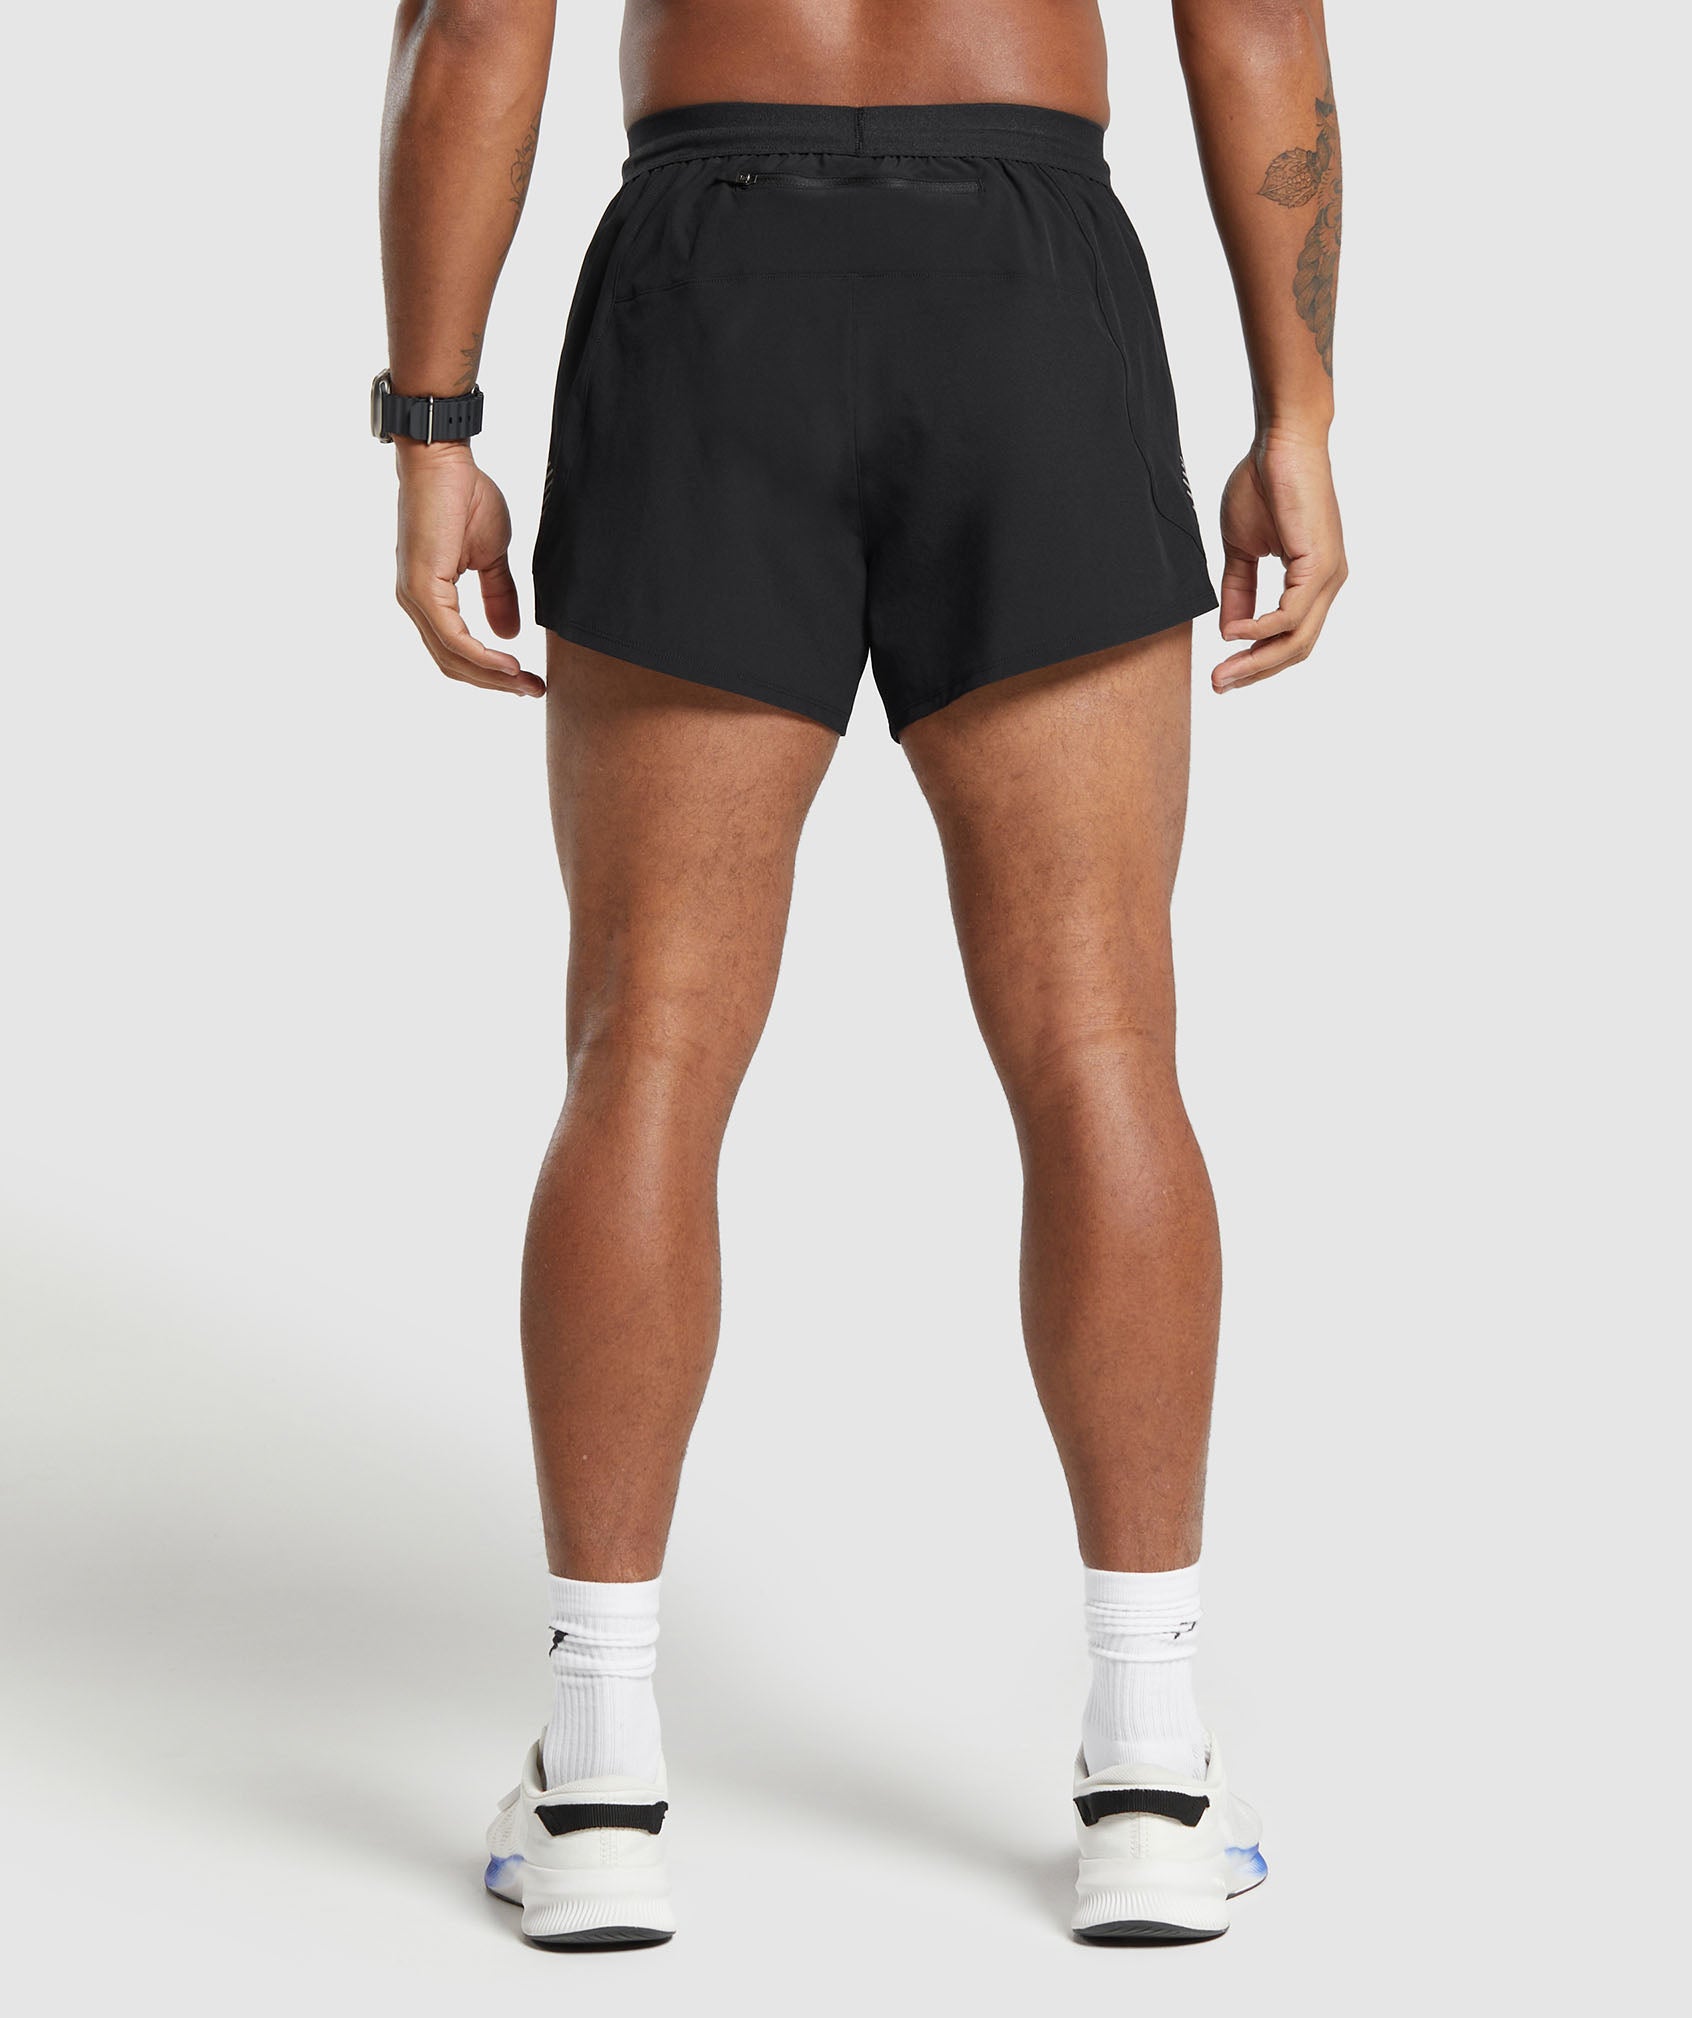 Apex Run 5" Shorts in Black - view 2